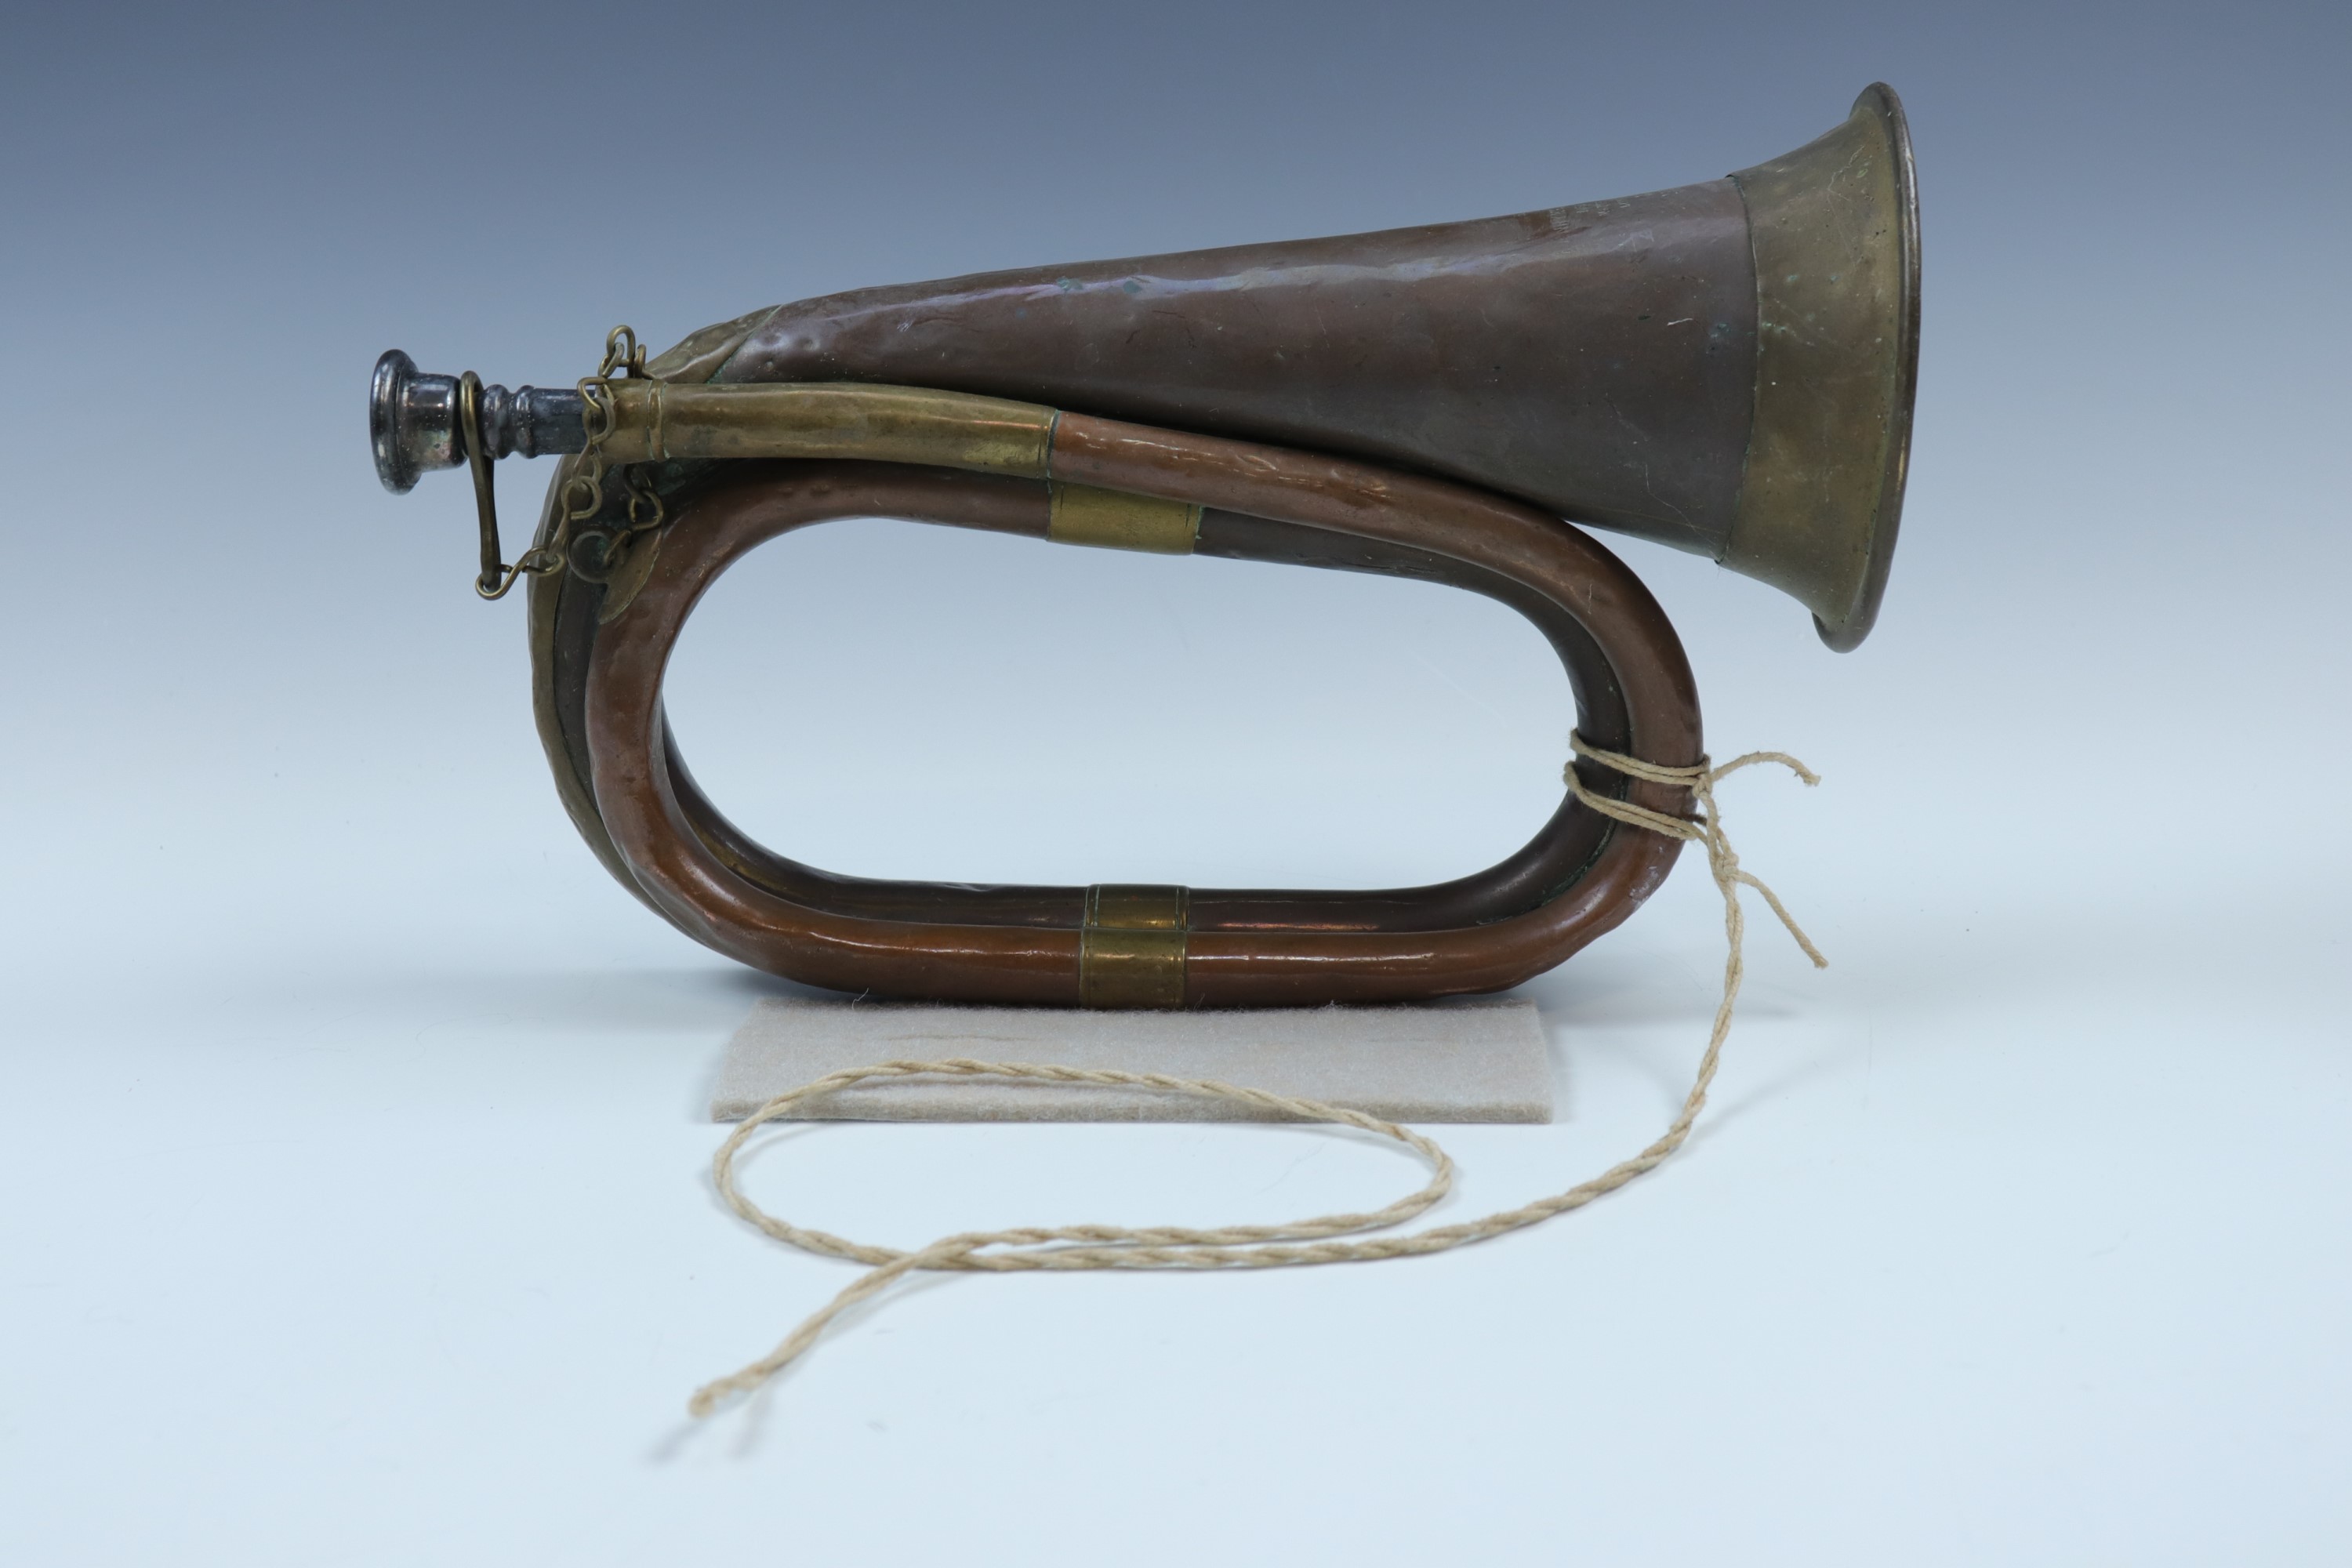 A 1924 dated British army bugle